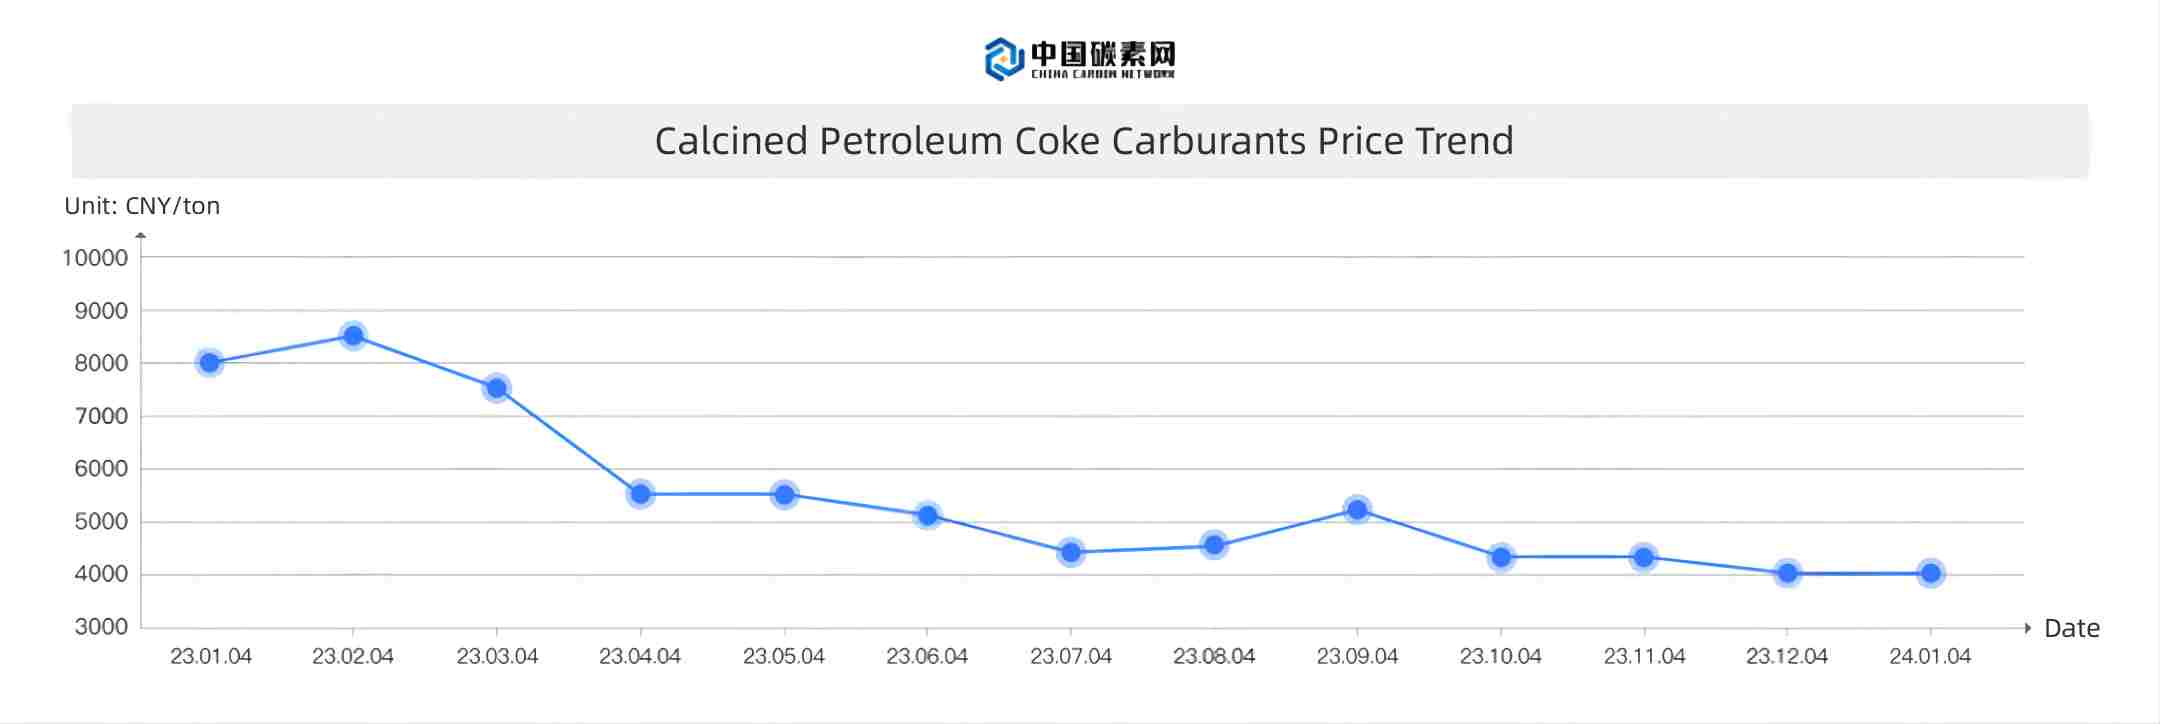 Calcined Petroleum Coke Carburants Price Trend.jpg